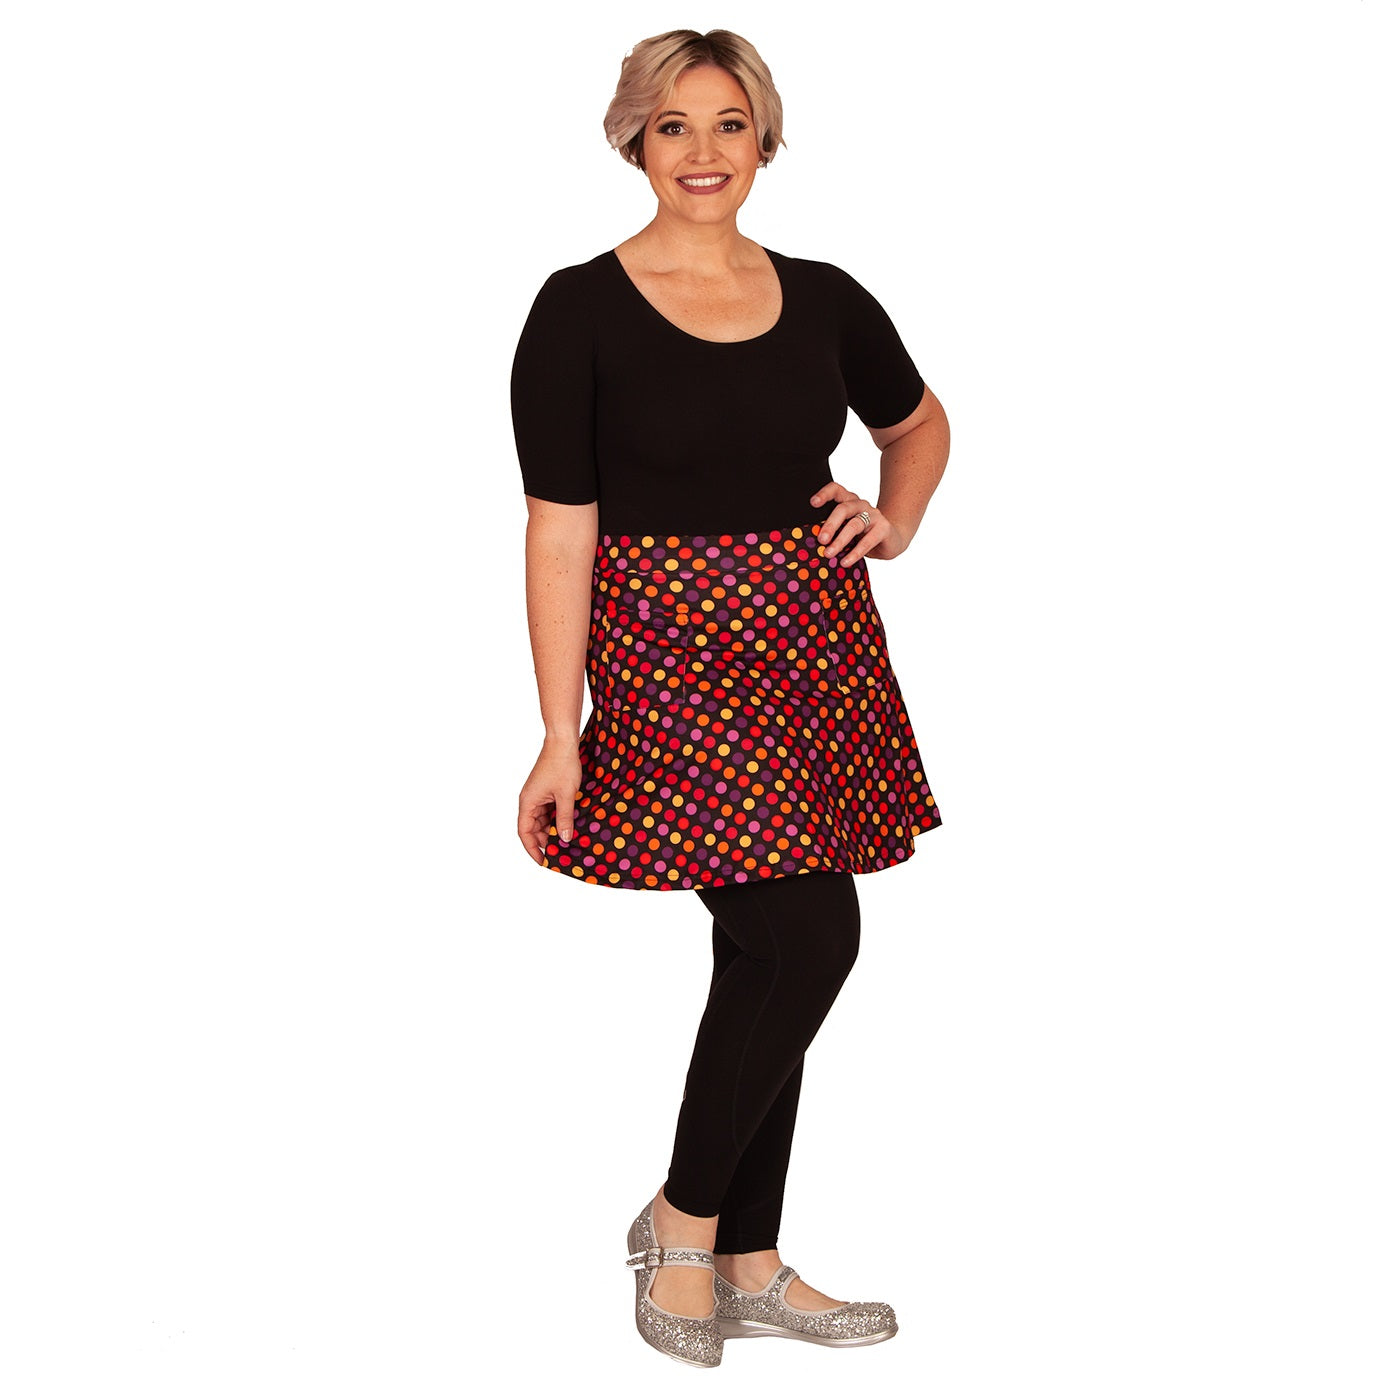 Pastel Confetti Short Skirt by RainbowsAndFairies.com (Pastel Polka Dots - Spots - Stripes - Skirt With Pockets - Aline Skirt - Cute Flirty - Vintage Inspired) - SKU: CL_SHORT_CONFT_PAS - Pic 06